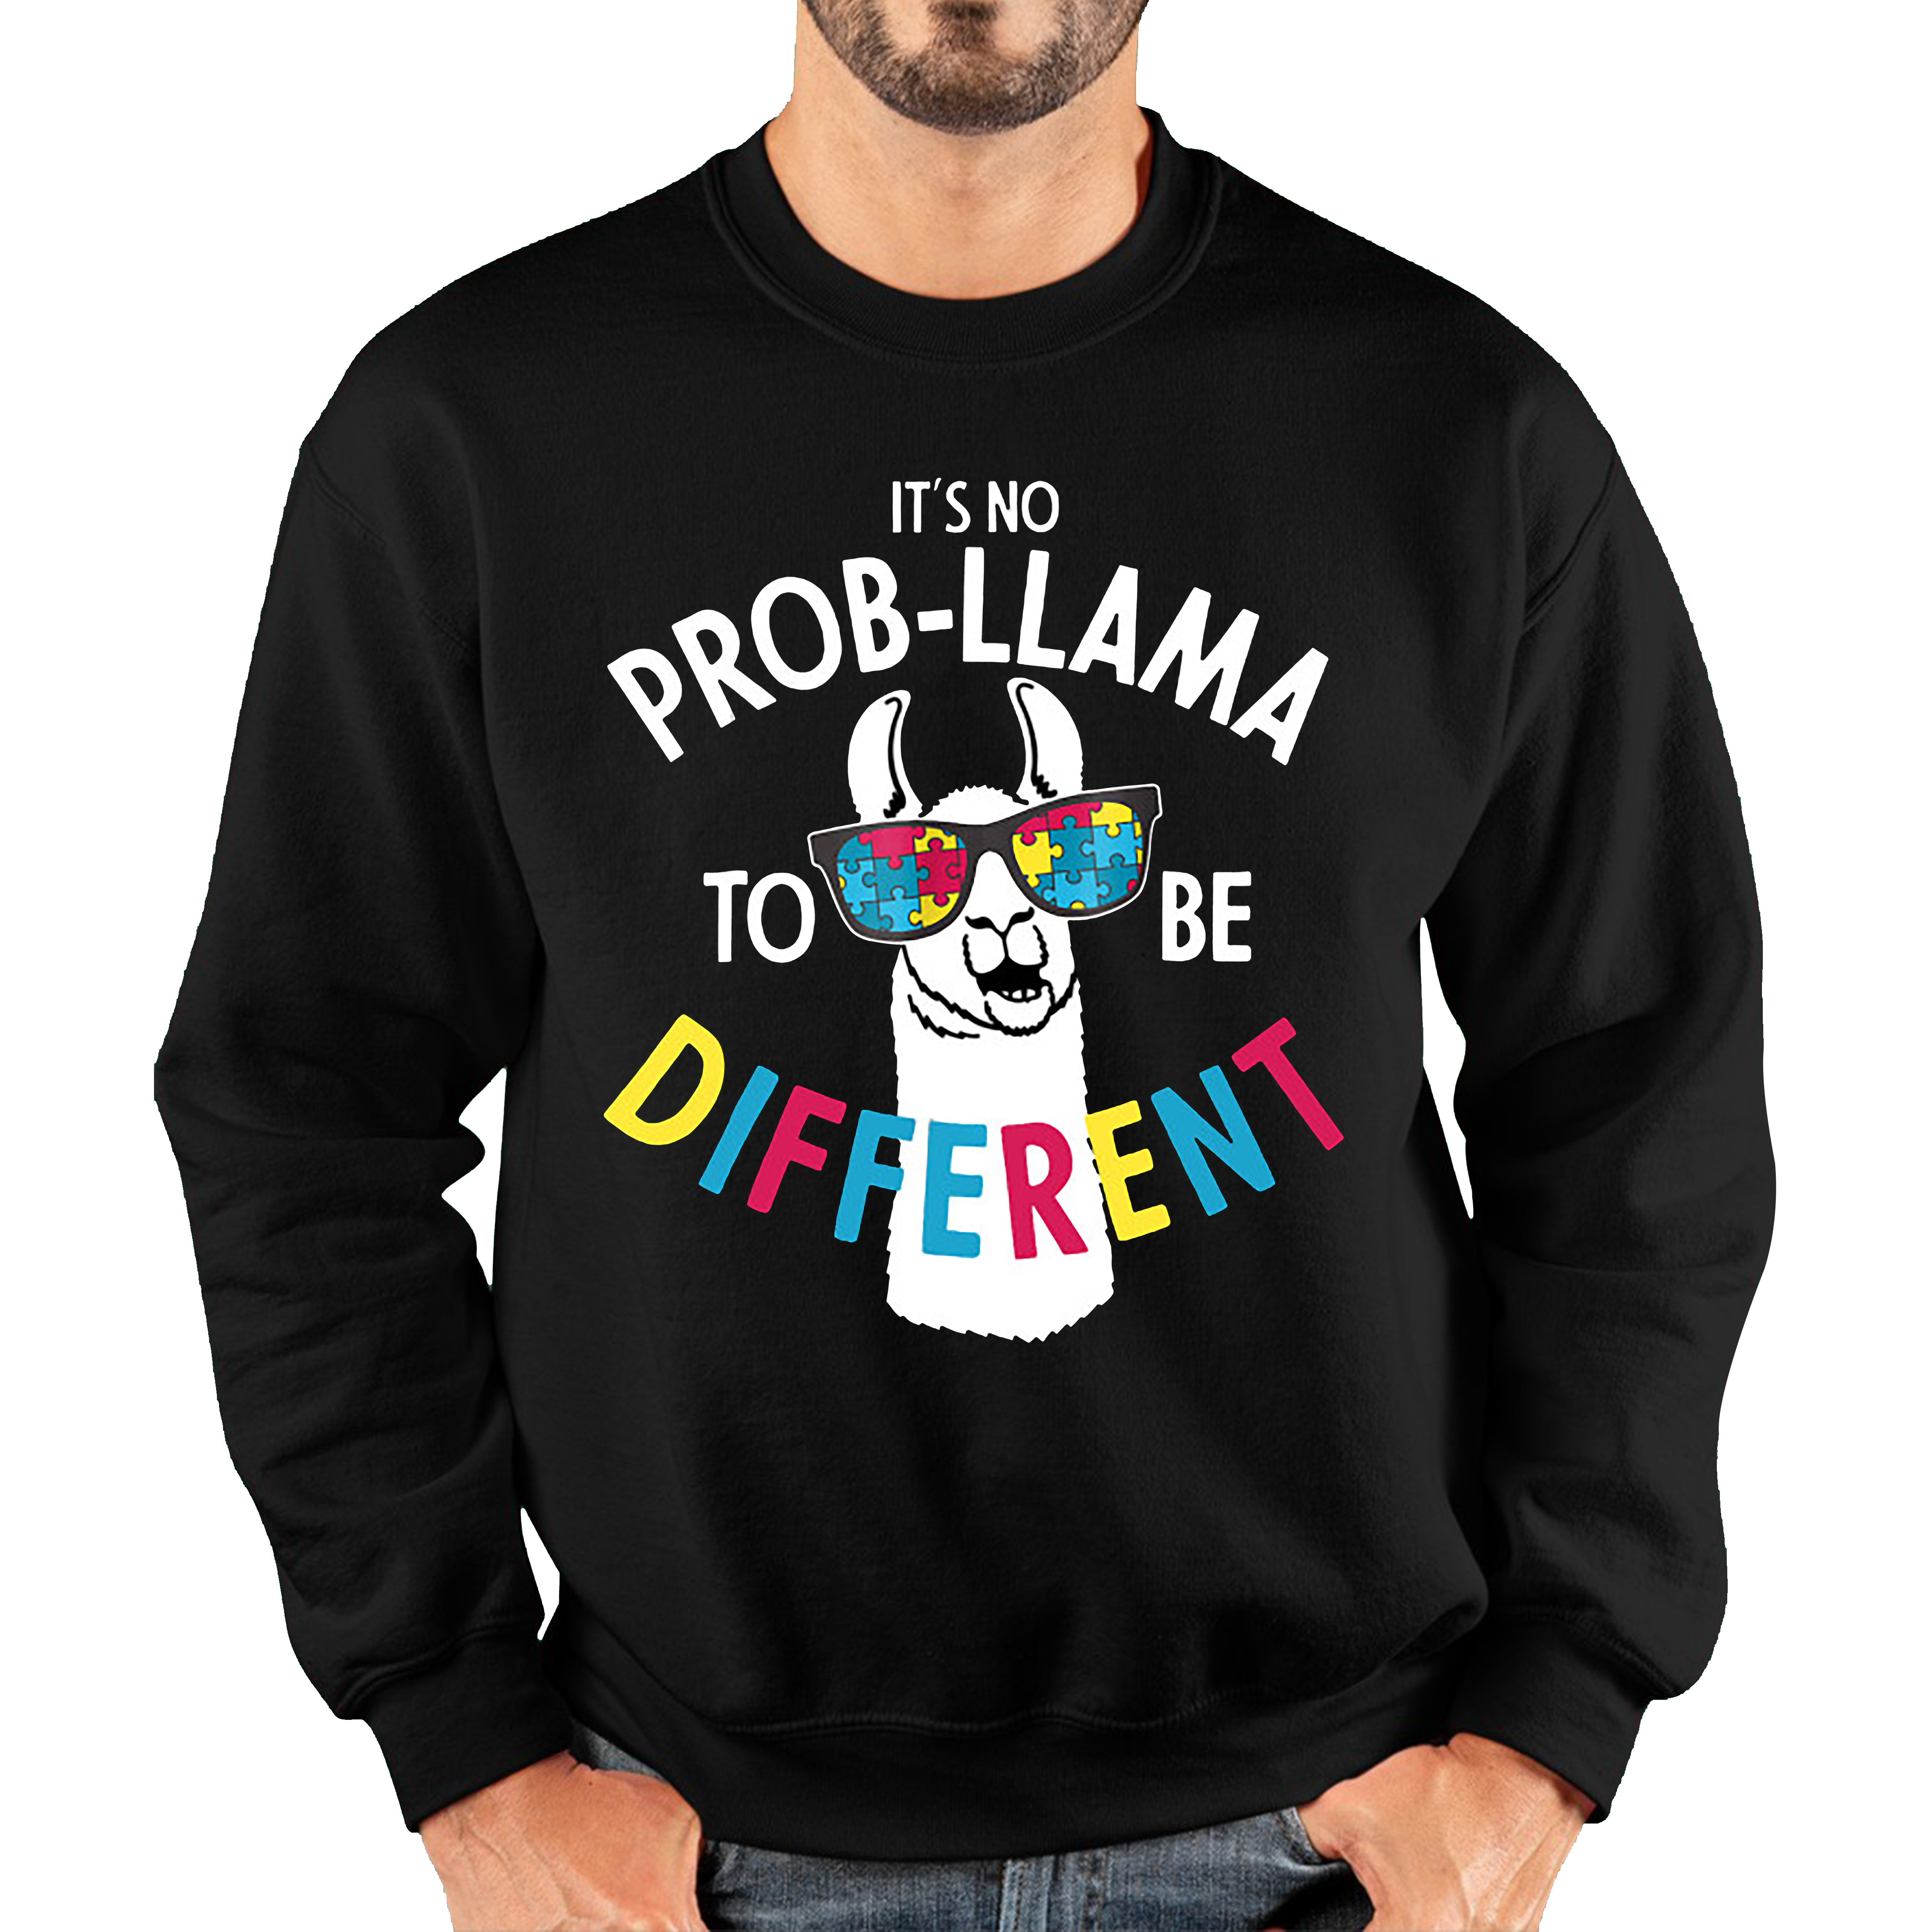 It's No Prob-llama To Be Different Autism Awareness Adult Sweatshirt